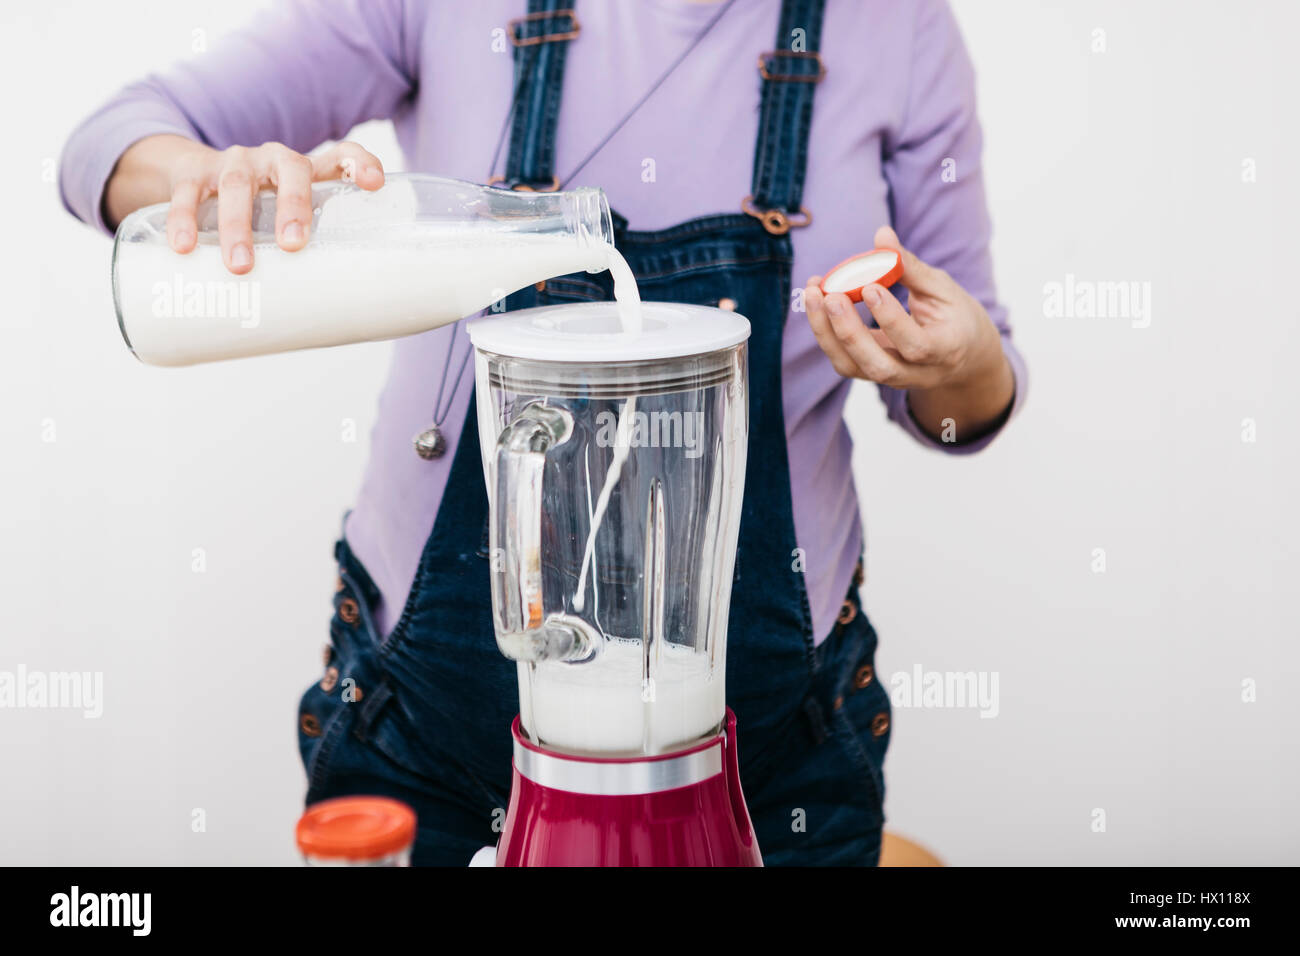 https://c8.alamy.com/comp/HX118X/pregnant-woman-pouring-milk-into-a-blender-for-preparing-smoothie-HX118X.jpg